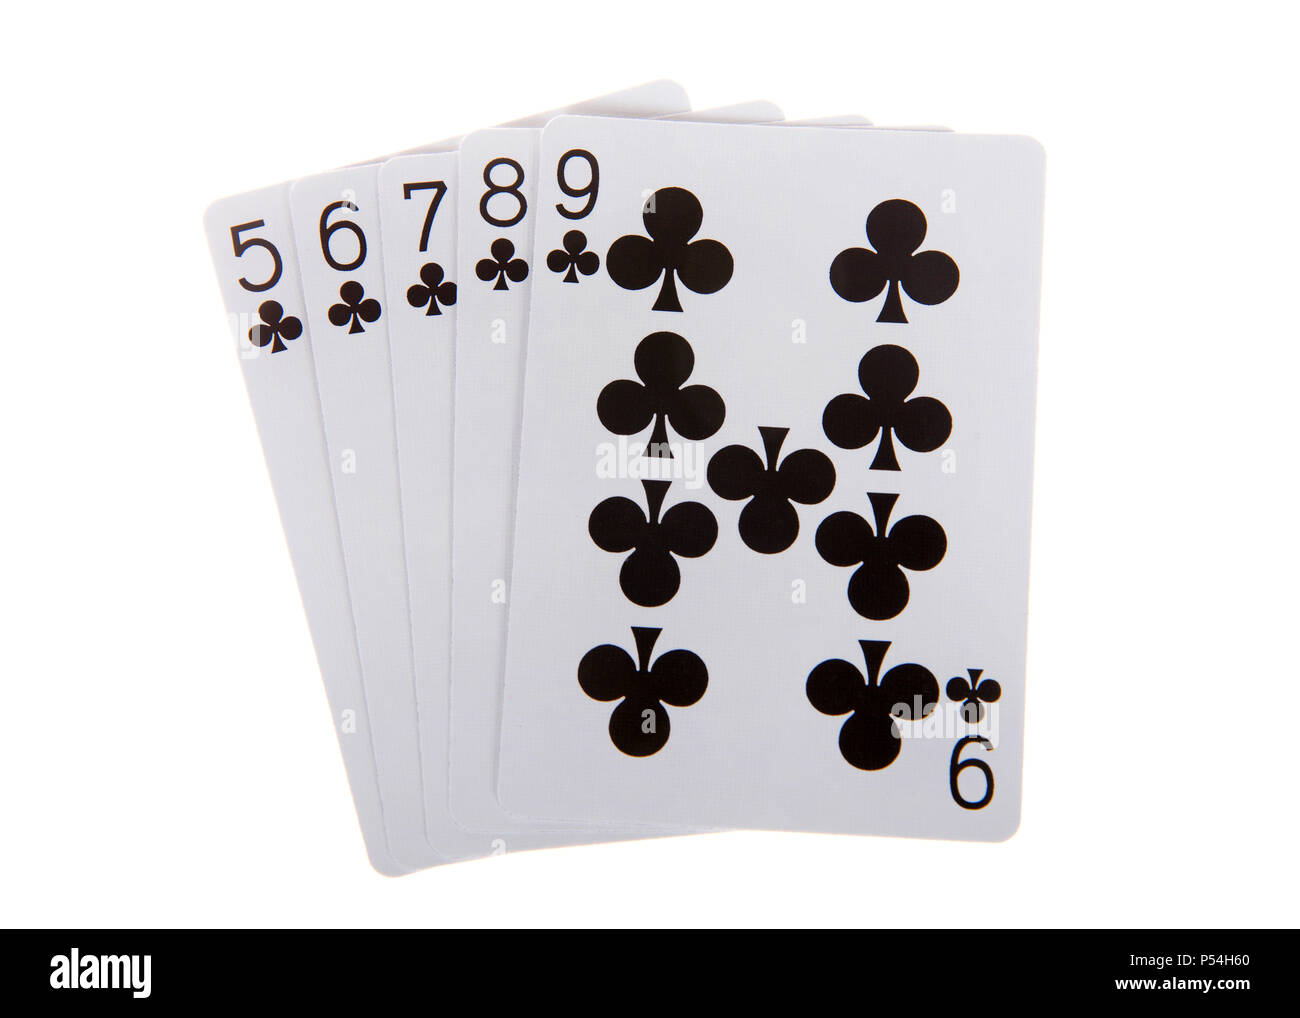 3 Decks Spanish Playing Cards Baraja Espanola 50 Cards Naipes Tarot New  Sealed 